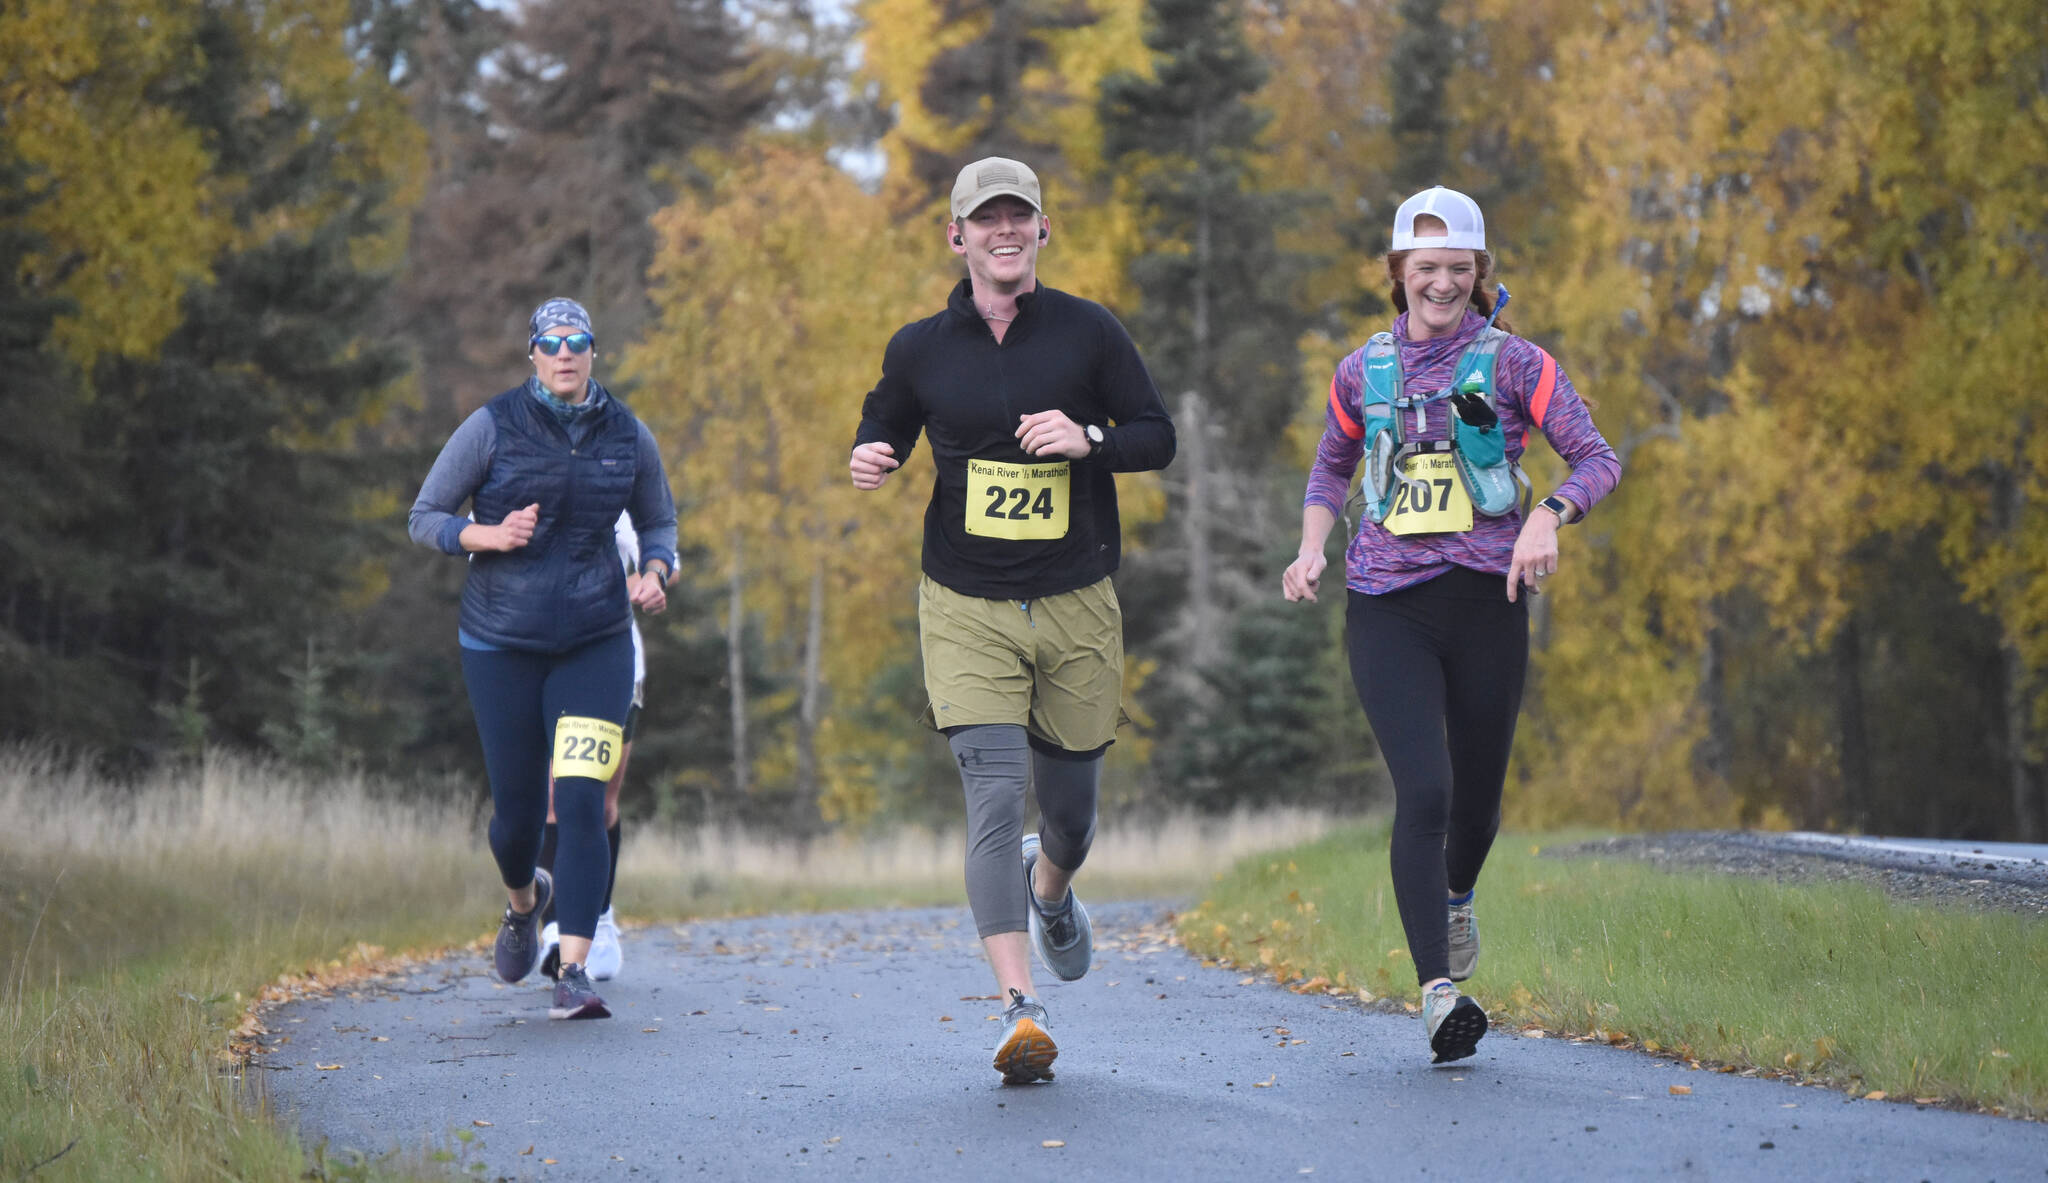 Megan Murphy, Cason Hucks and Allison Reeves run in the half marathon at the Kenai River Marathon on Sunday, Sept. 25, 2022, in Kenai, Alaska. (Photo by Jeff Helminiak/Peninsula Clarion)